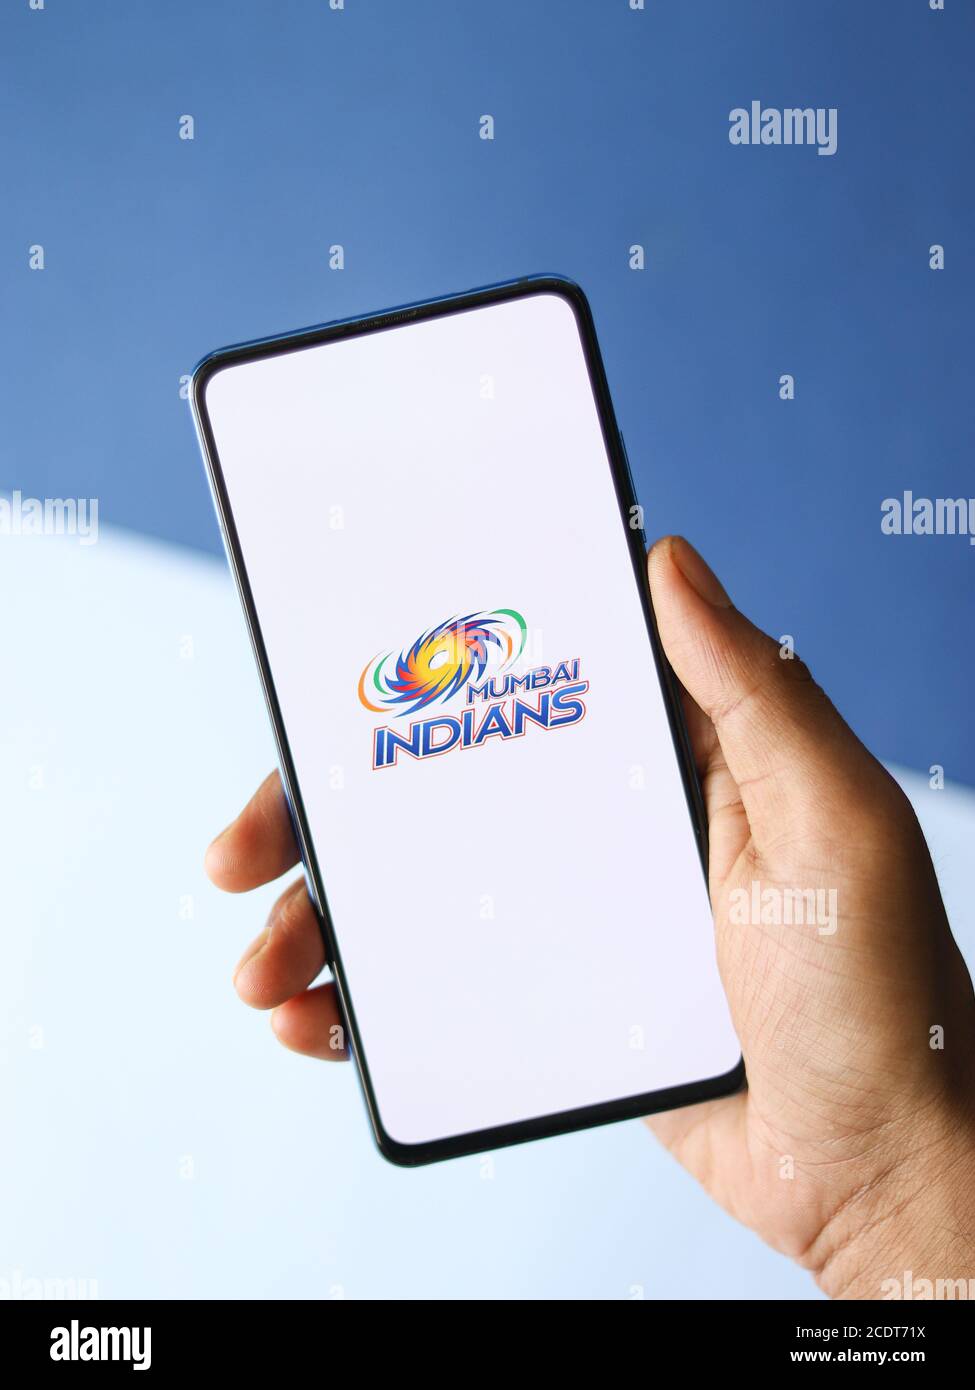 Assam, india - August 27, 2020 : Mumbai Indians logo on phone screen stock image. Stock Photo